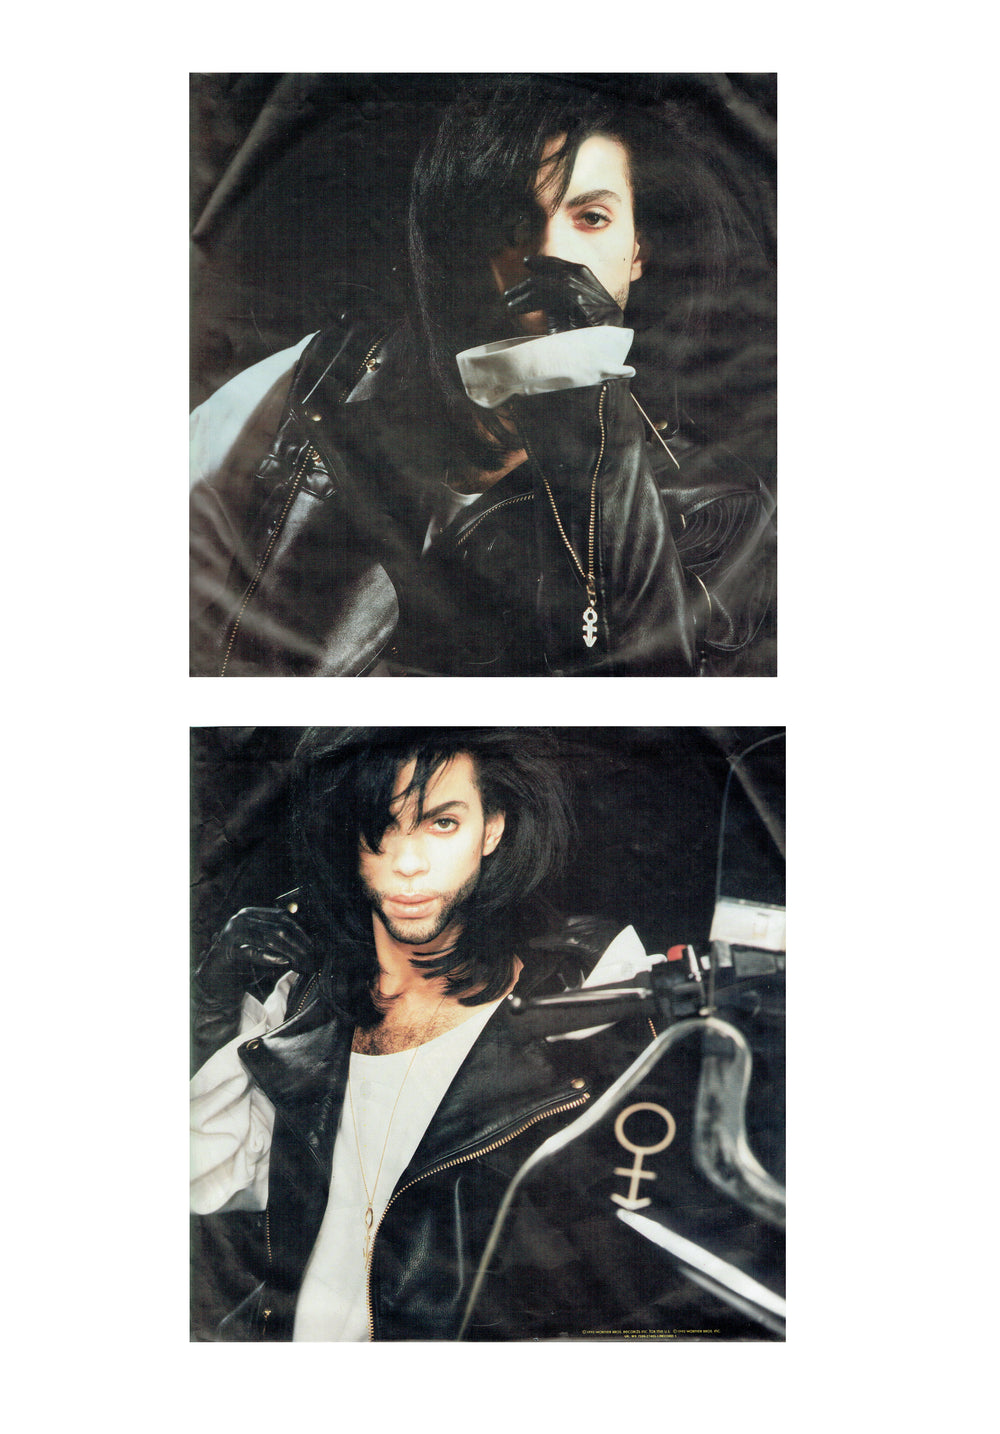 Prince – Graffiti Bridge Soundtrack Vinyl x 2L, Album Europe Preloved: 1990